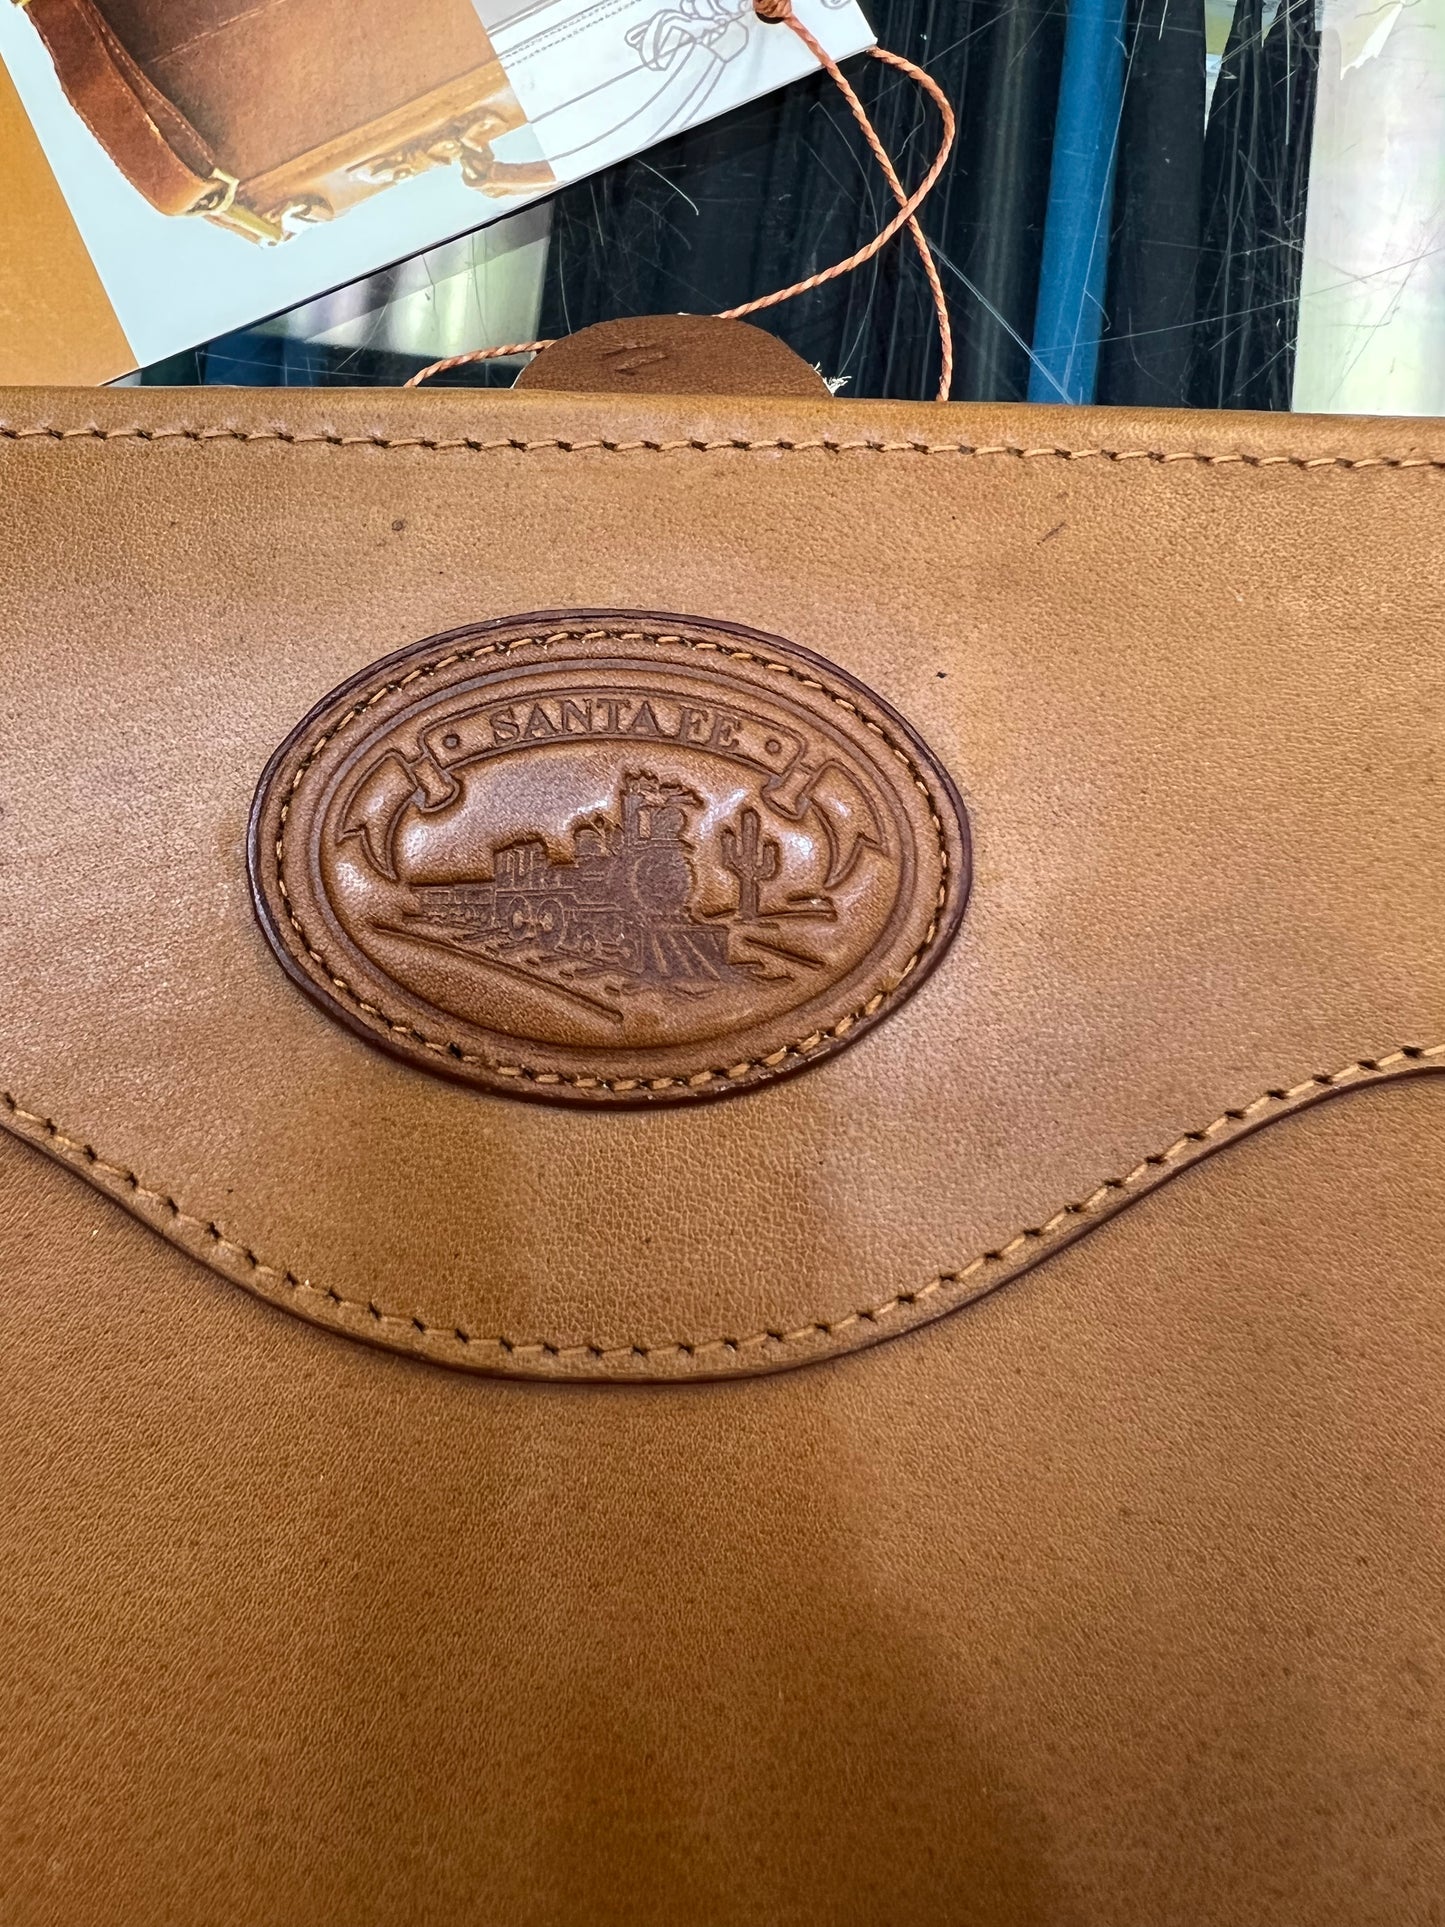 On Sale- Santa Fe Collection Leather Padfolio (Tan)